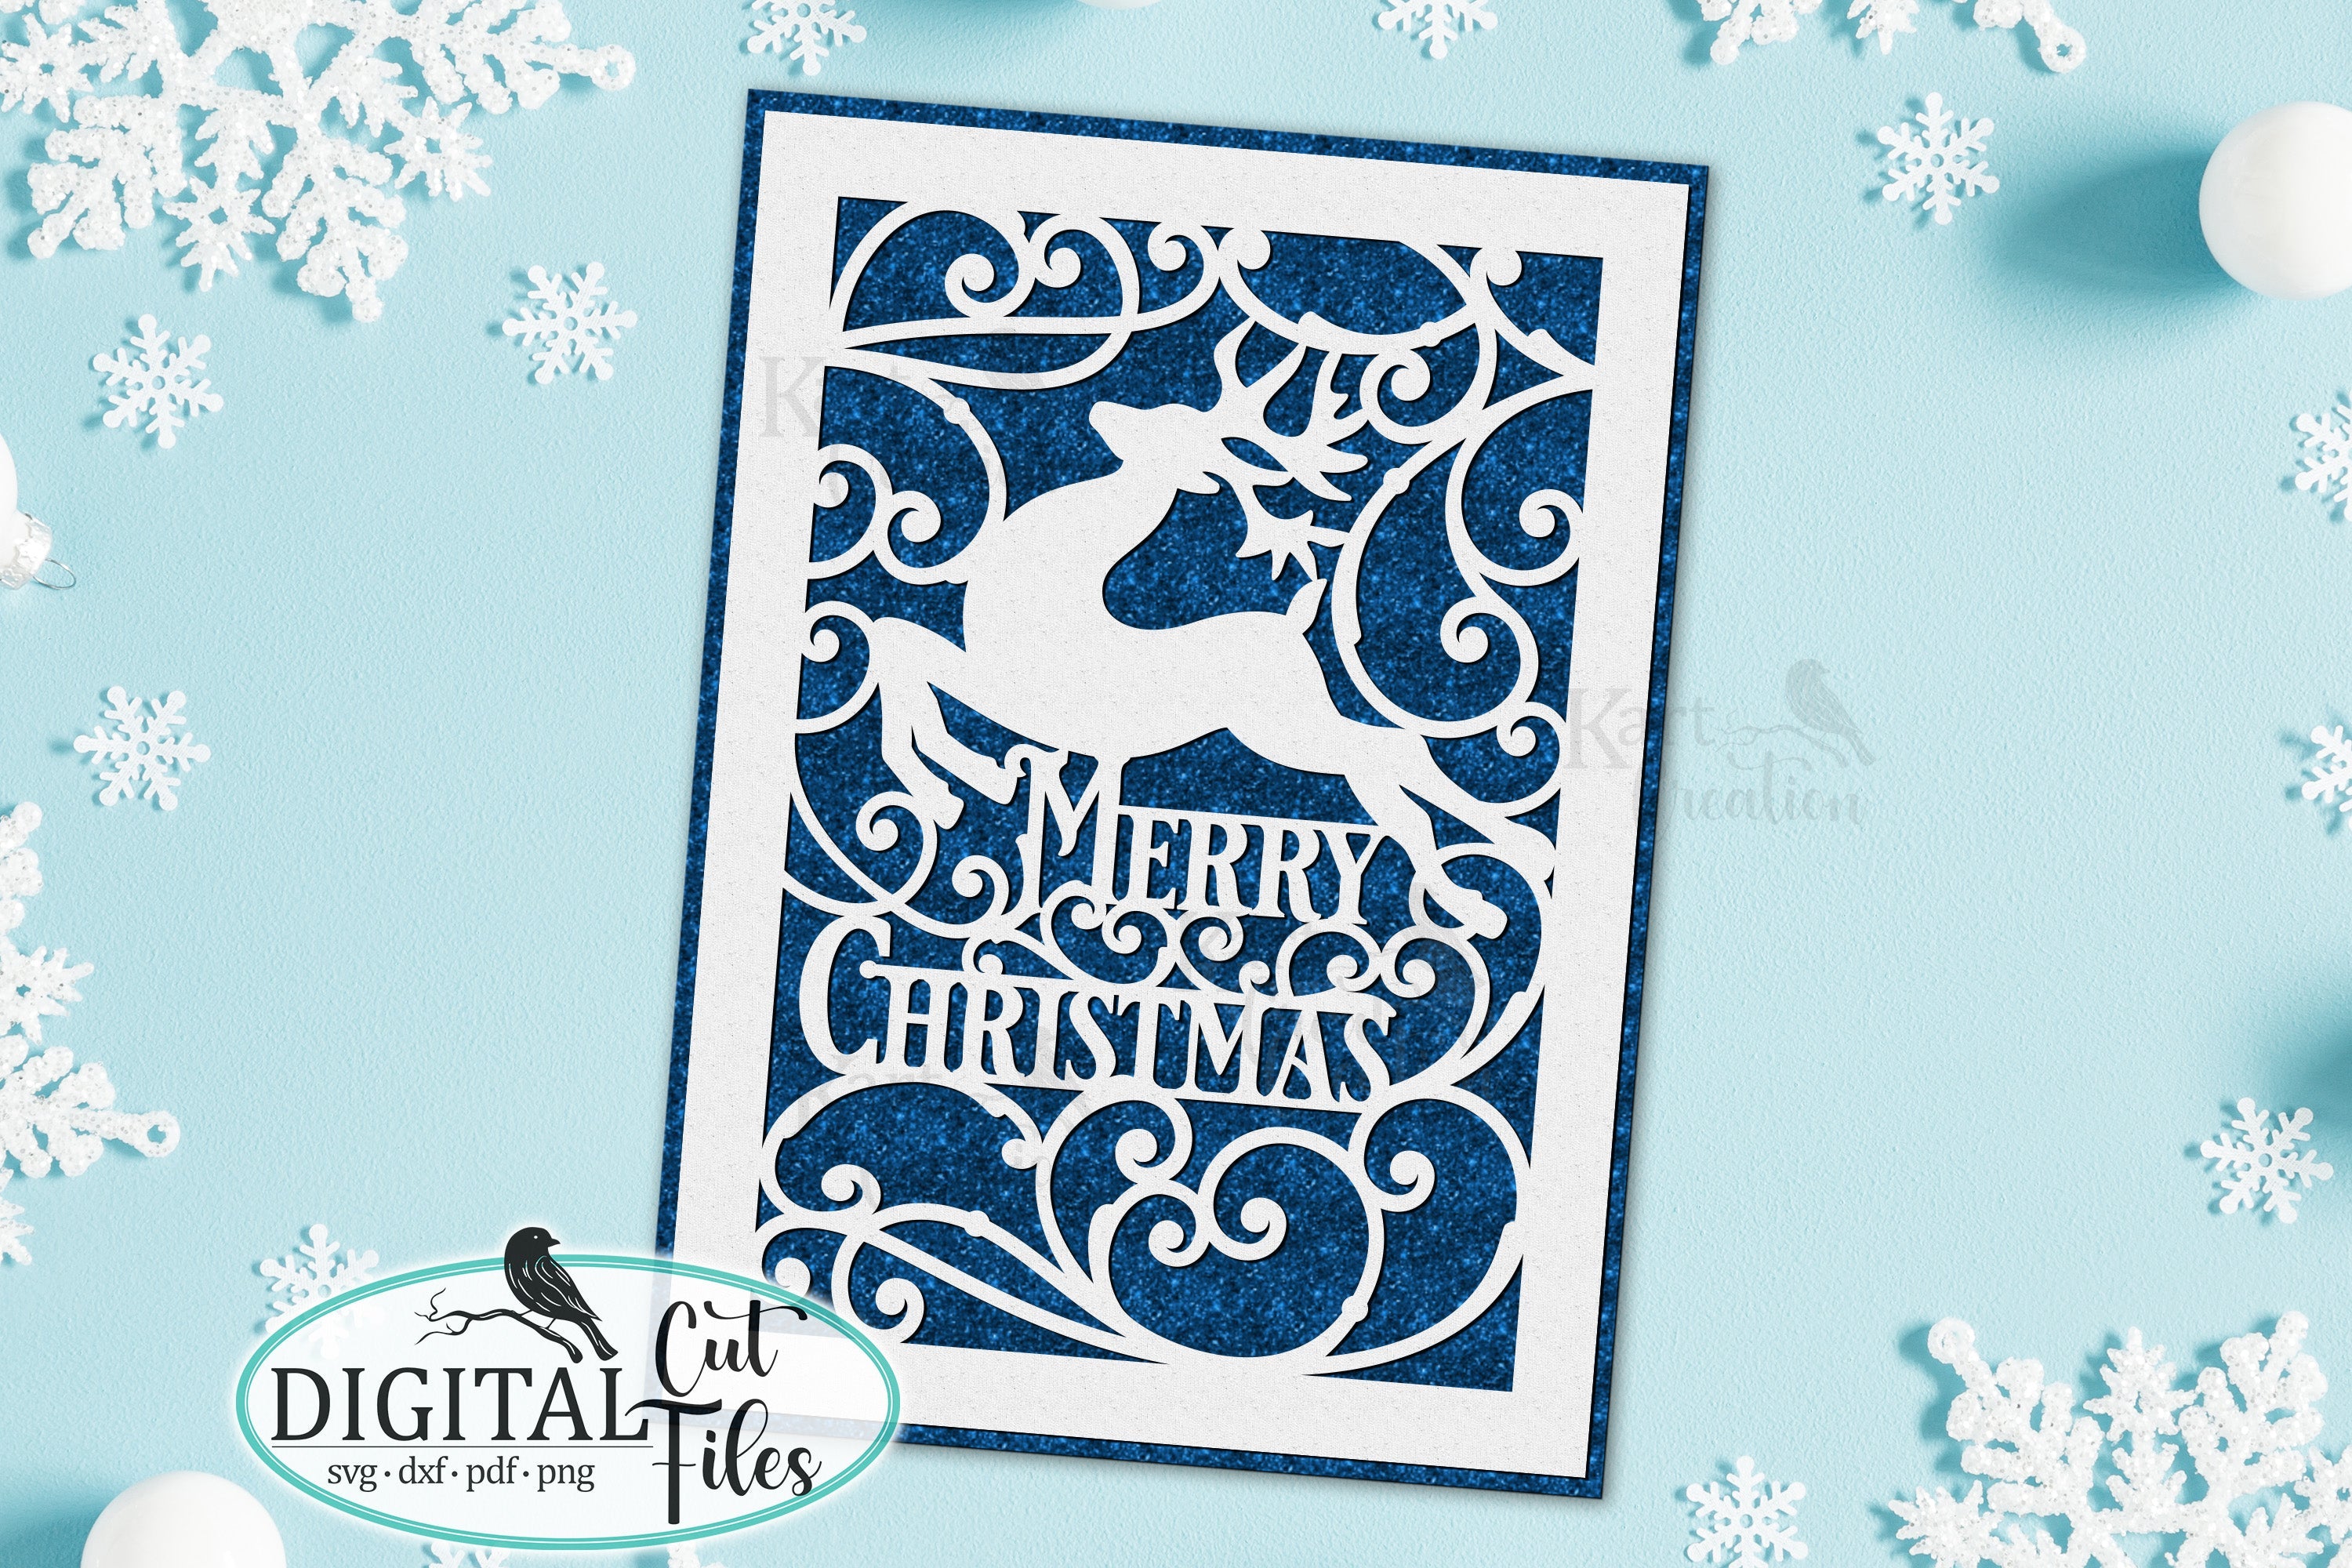 SVG: Christmas Insert Card. Cricut Joy Friendly. Draw and Cut Card Design.  Envelope Template Included. Cricut Joy Christmas Card SVG 